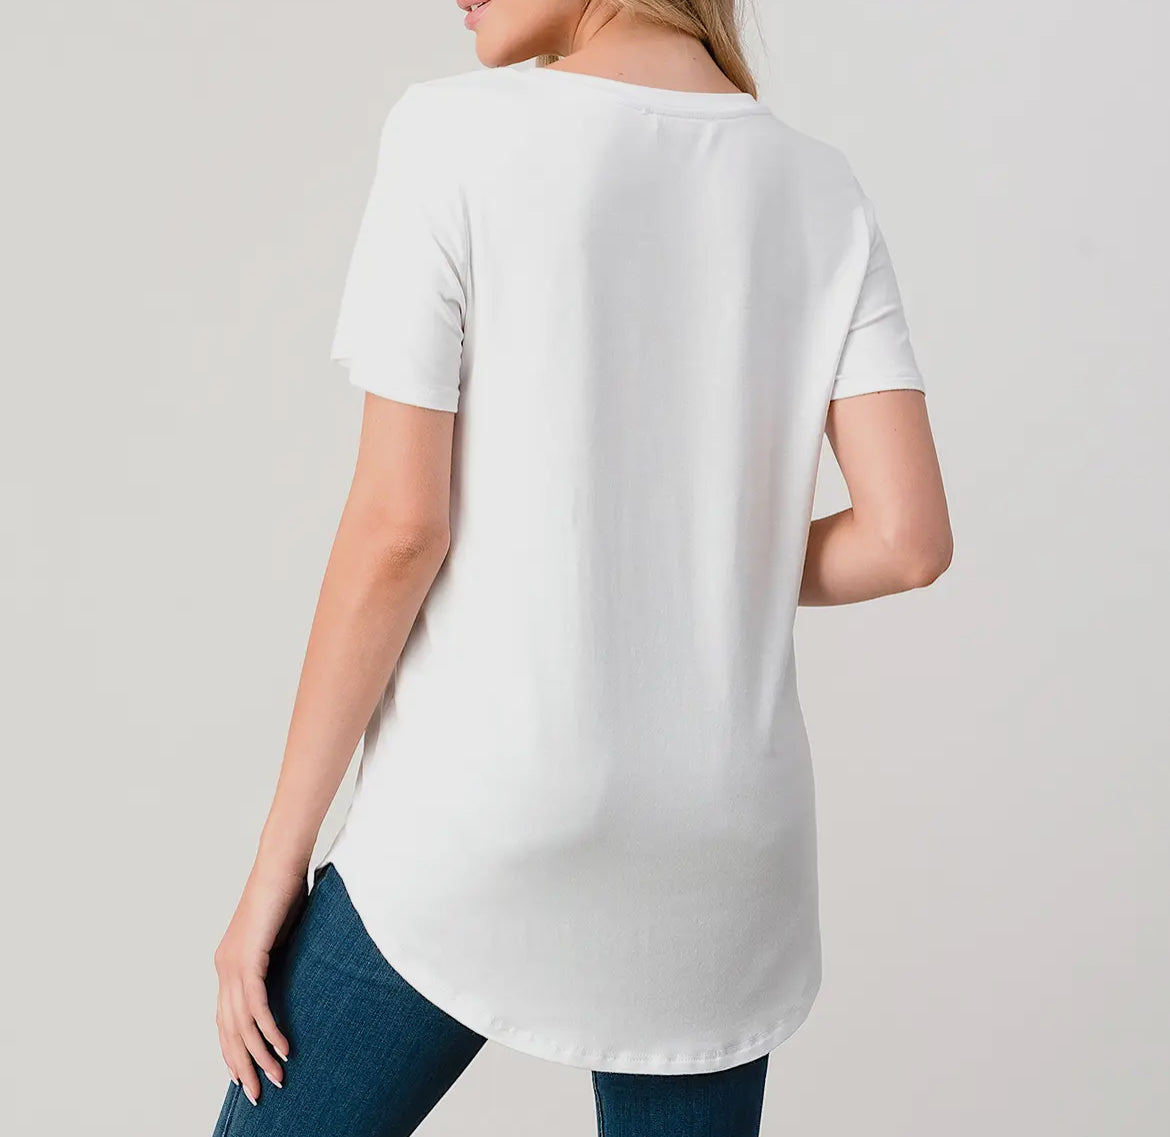 Heimious T-shirt - v-neck